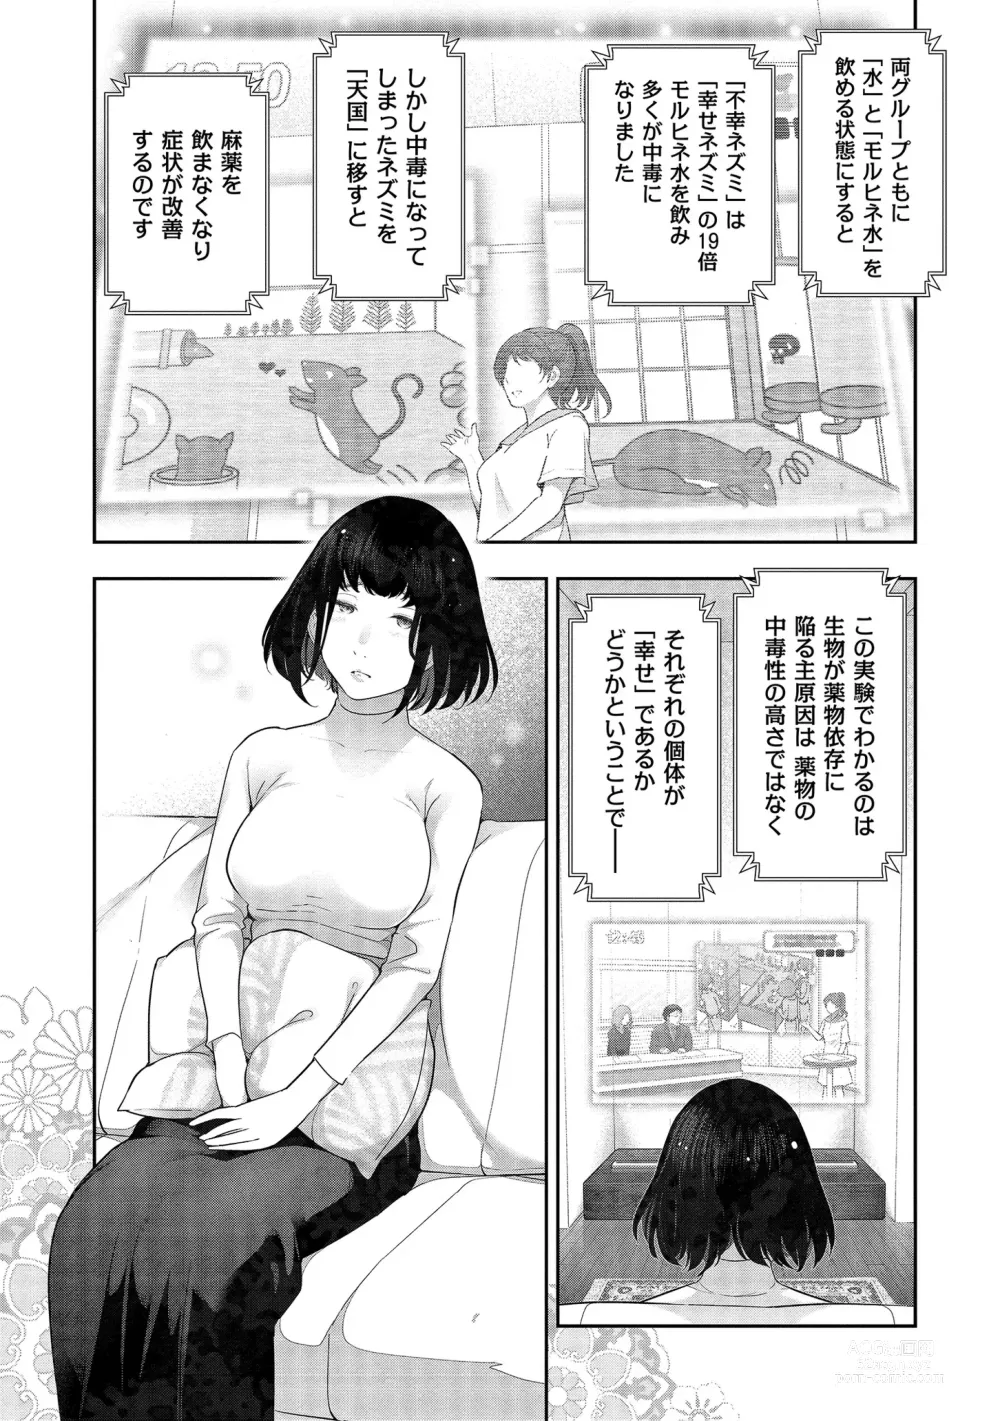 Page 168 of manga Shiawase no Kuni